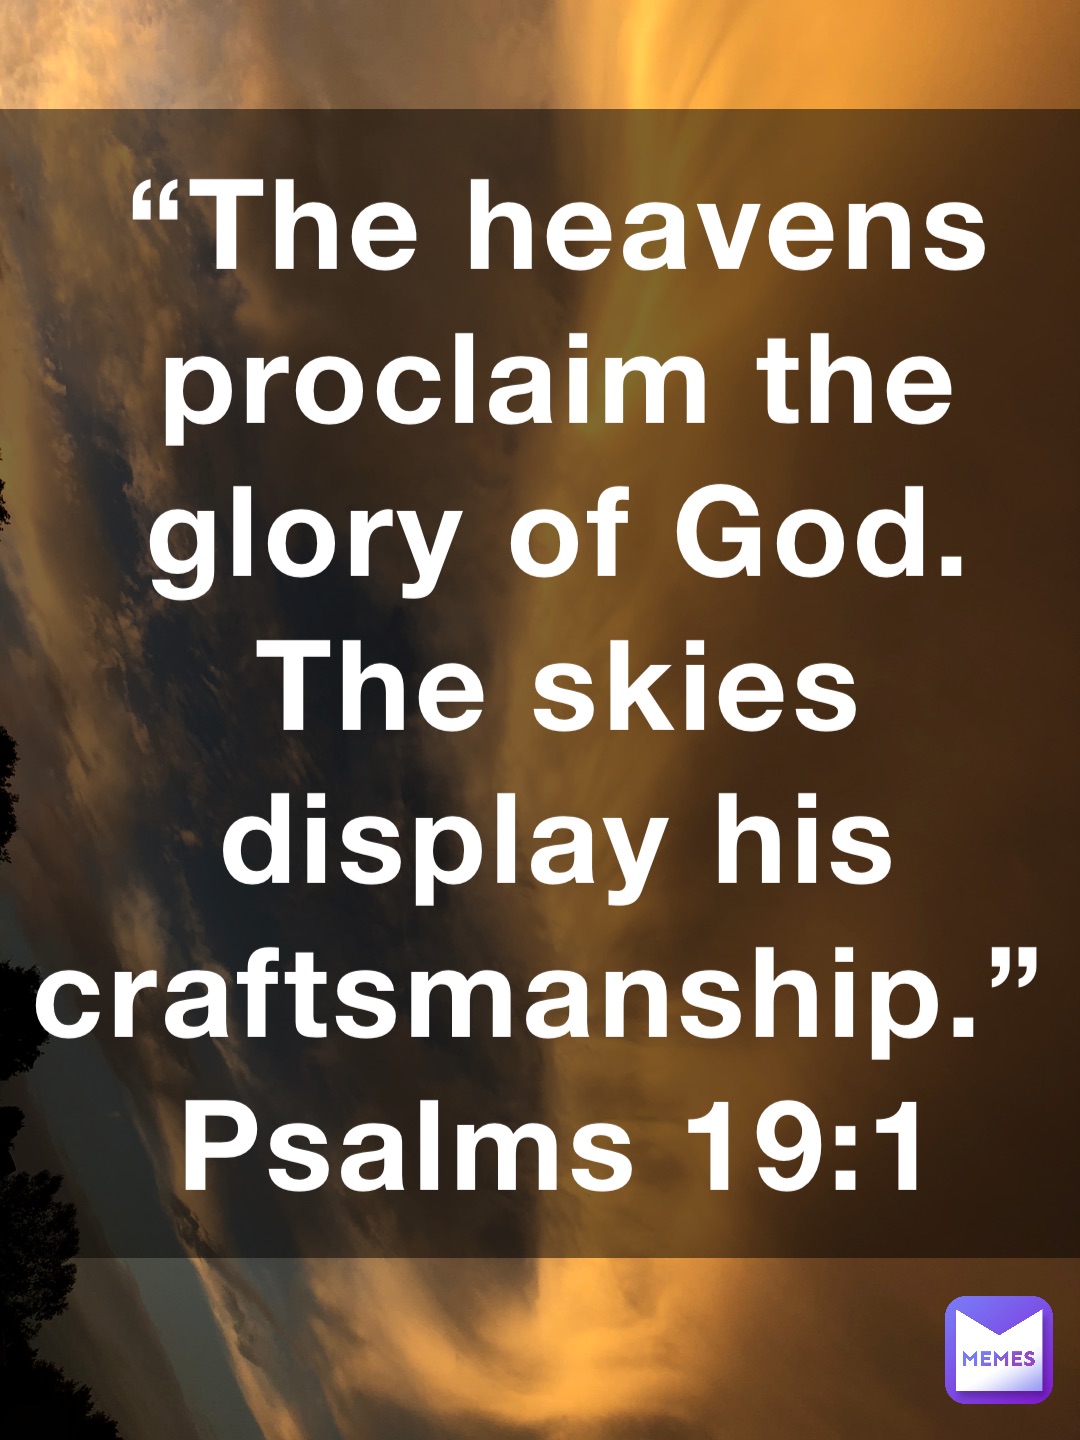 “The heavens proclaim the glory of God. The skies display his craftsmanship.”
‭‭Psalms‬ ‭19‬:‭1‬ ‭NLT‬‬